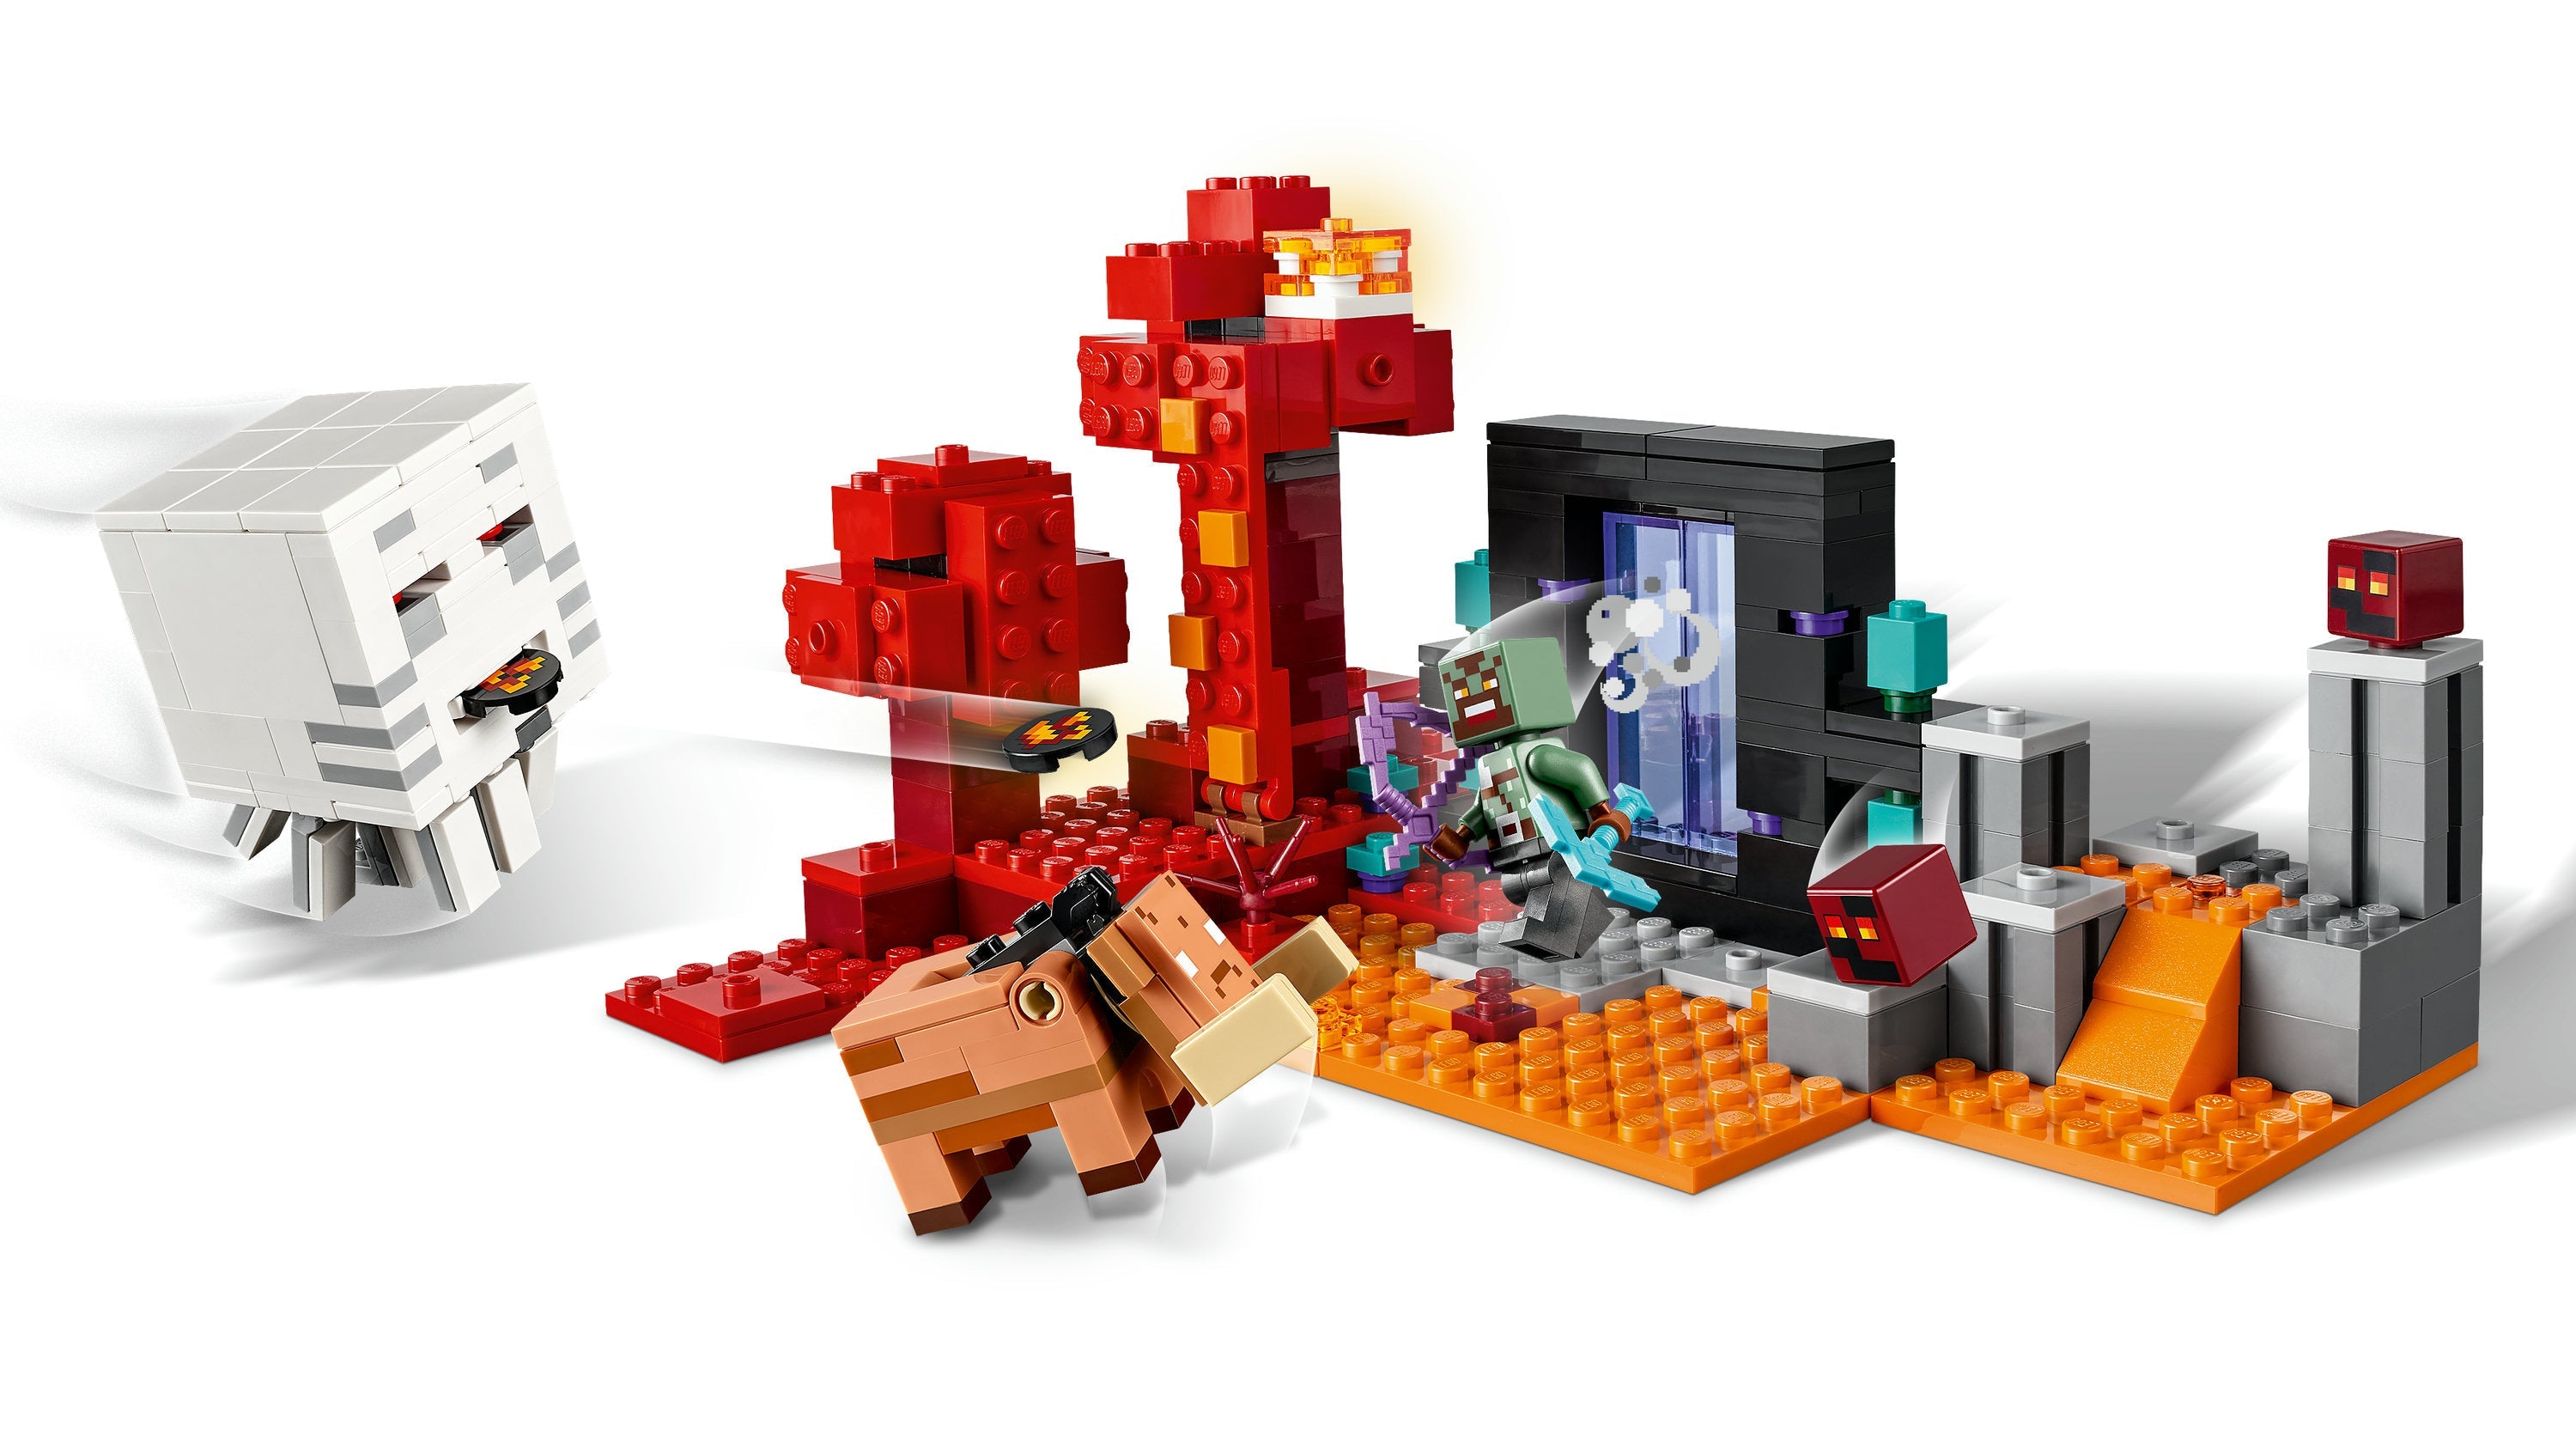 LEGO Minecraft - The Nether Portal Ambush